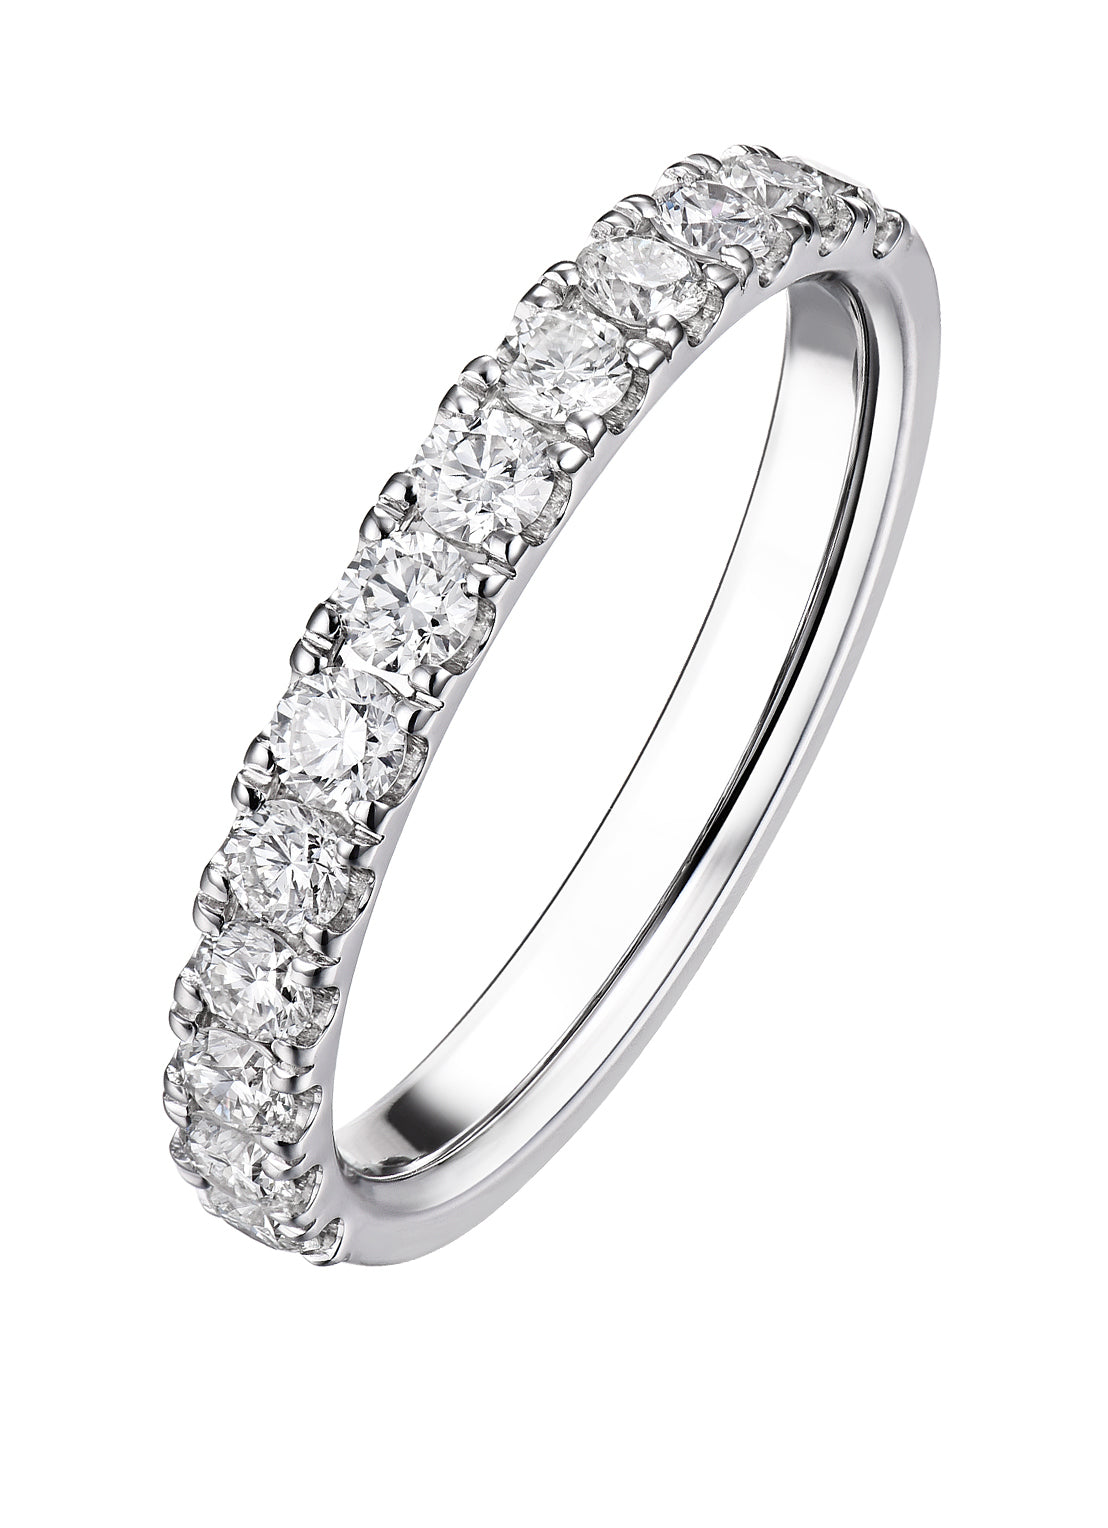 White gold ring, 1.01 ct diamond, wedding